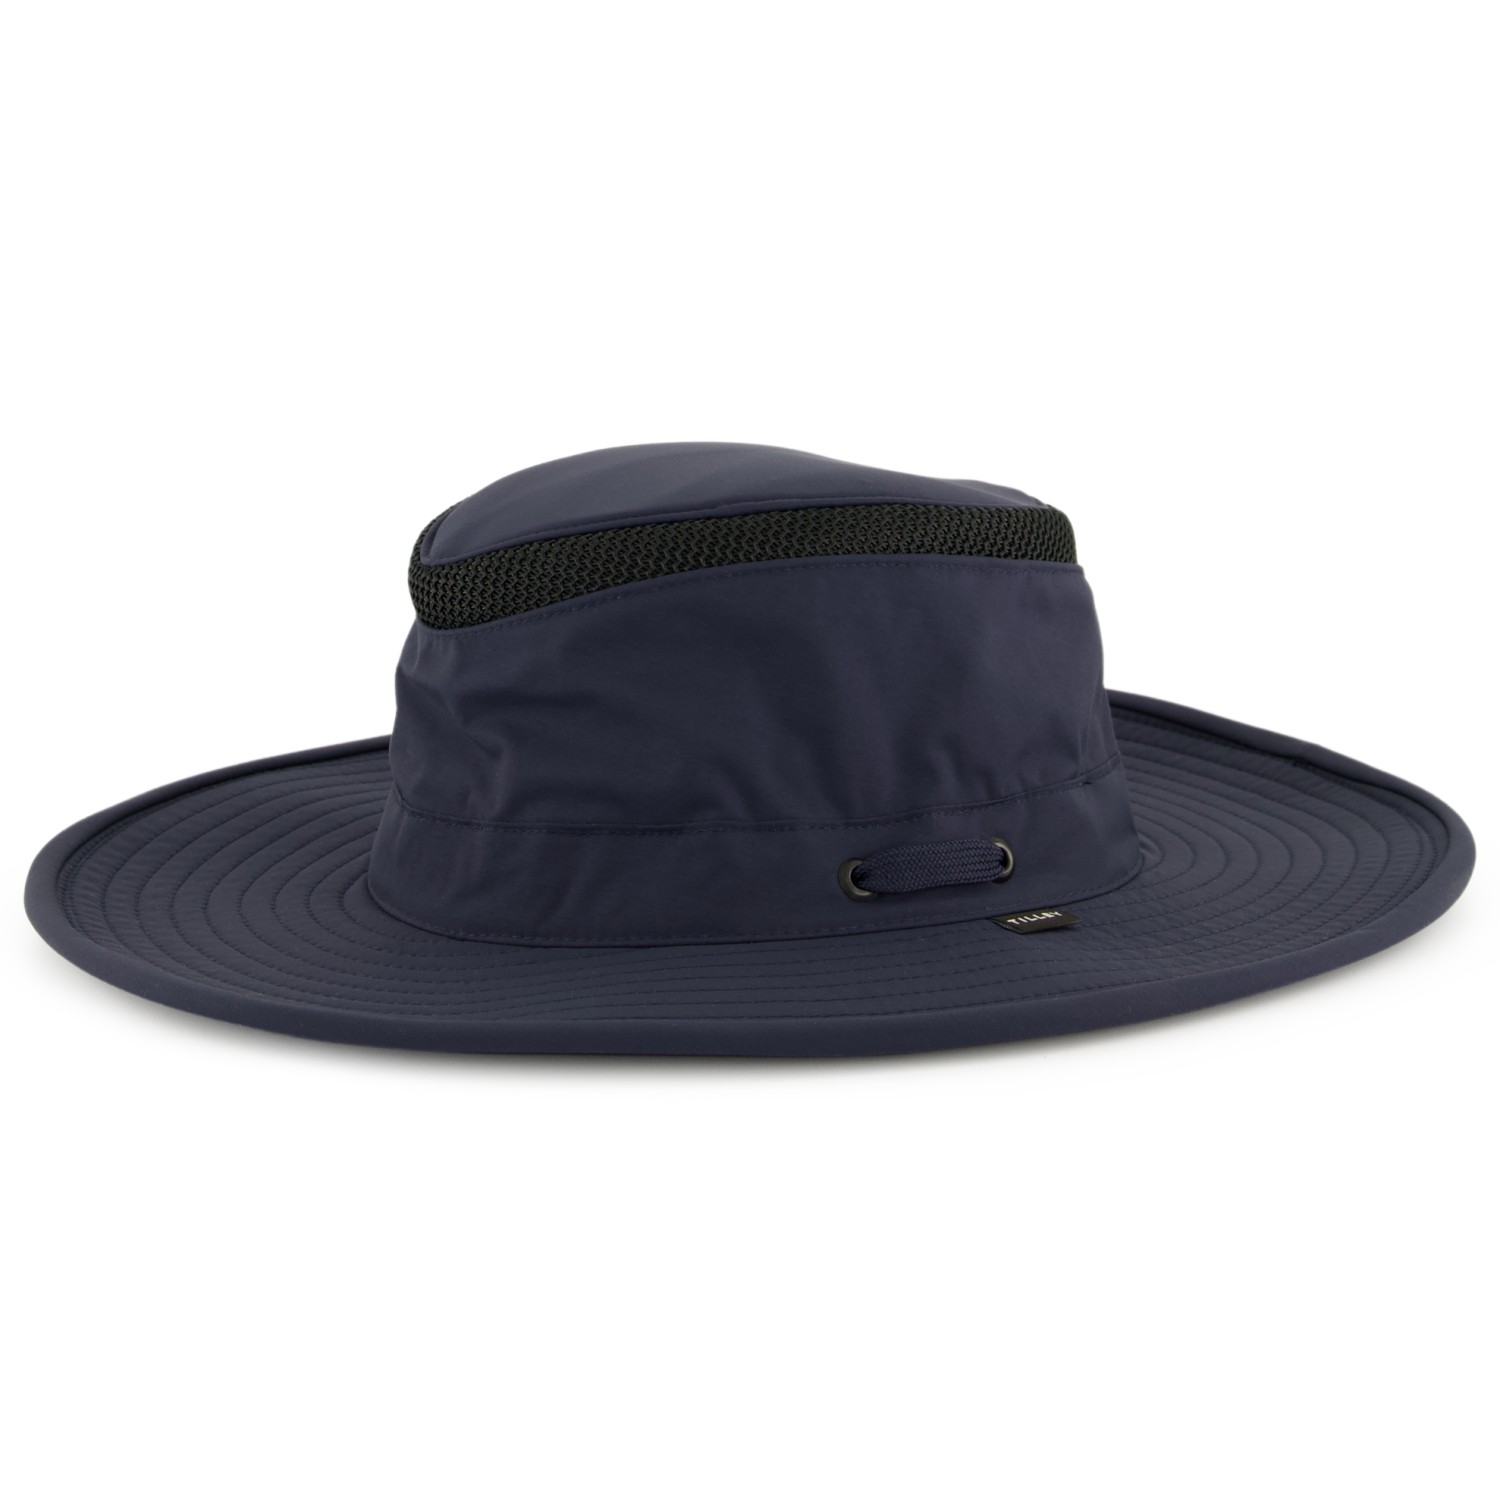 Кепка Tilley Airflo Broad Brim Hat, цвет Midnight Navy летняя вязаная шляпа рыбака с вырезами шляпа от солнца и солнца универсальная летняя шляпа от солнца уличные панамы